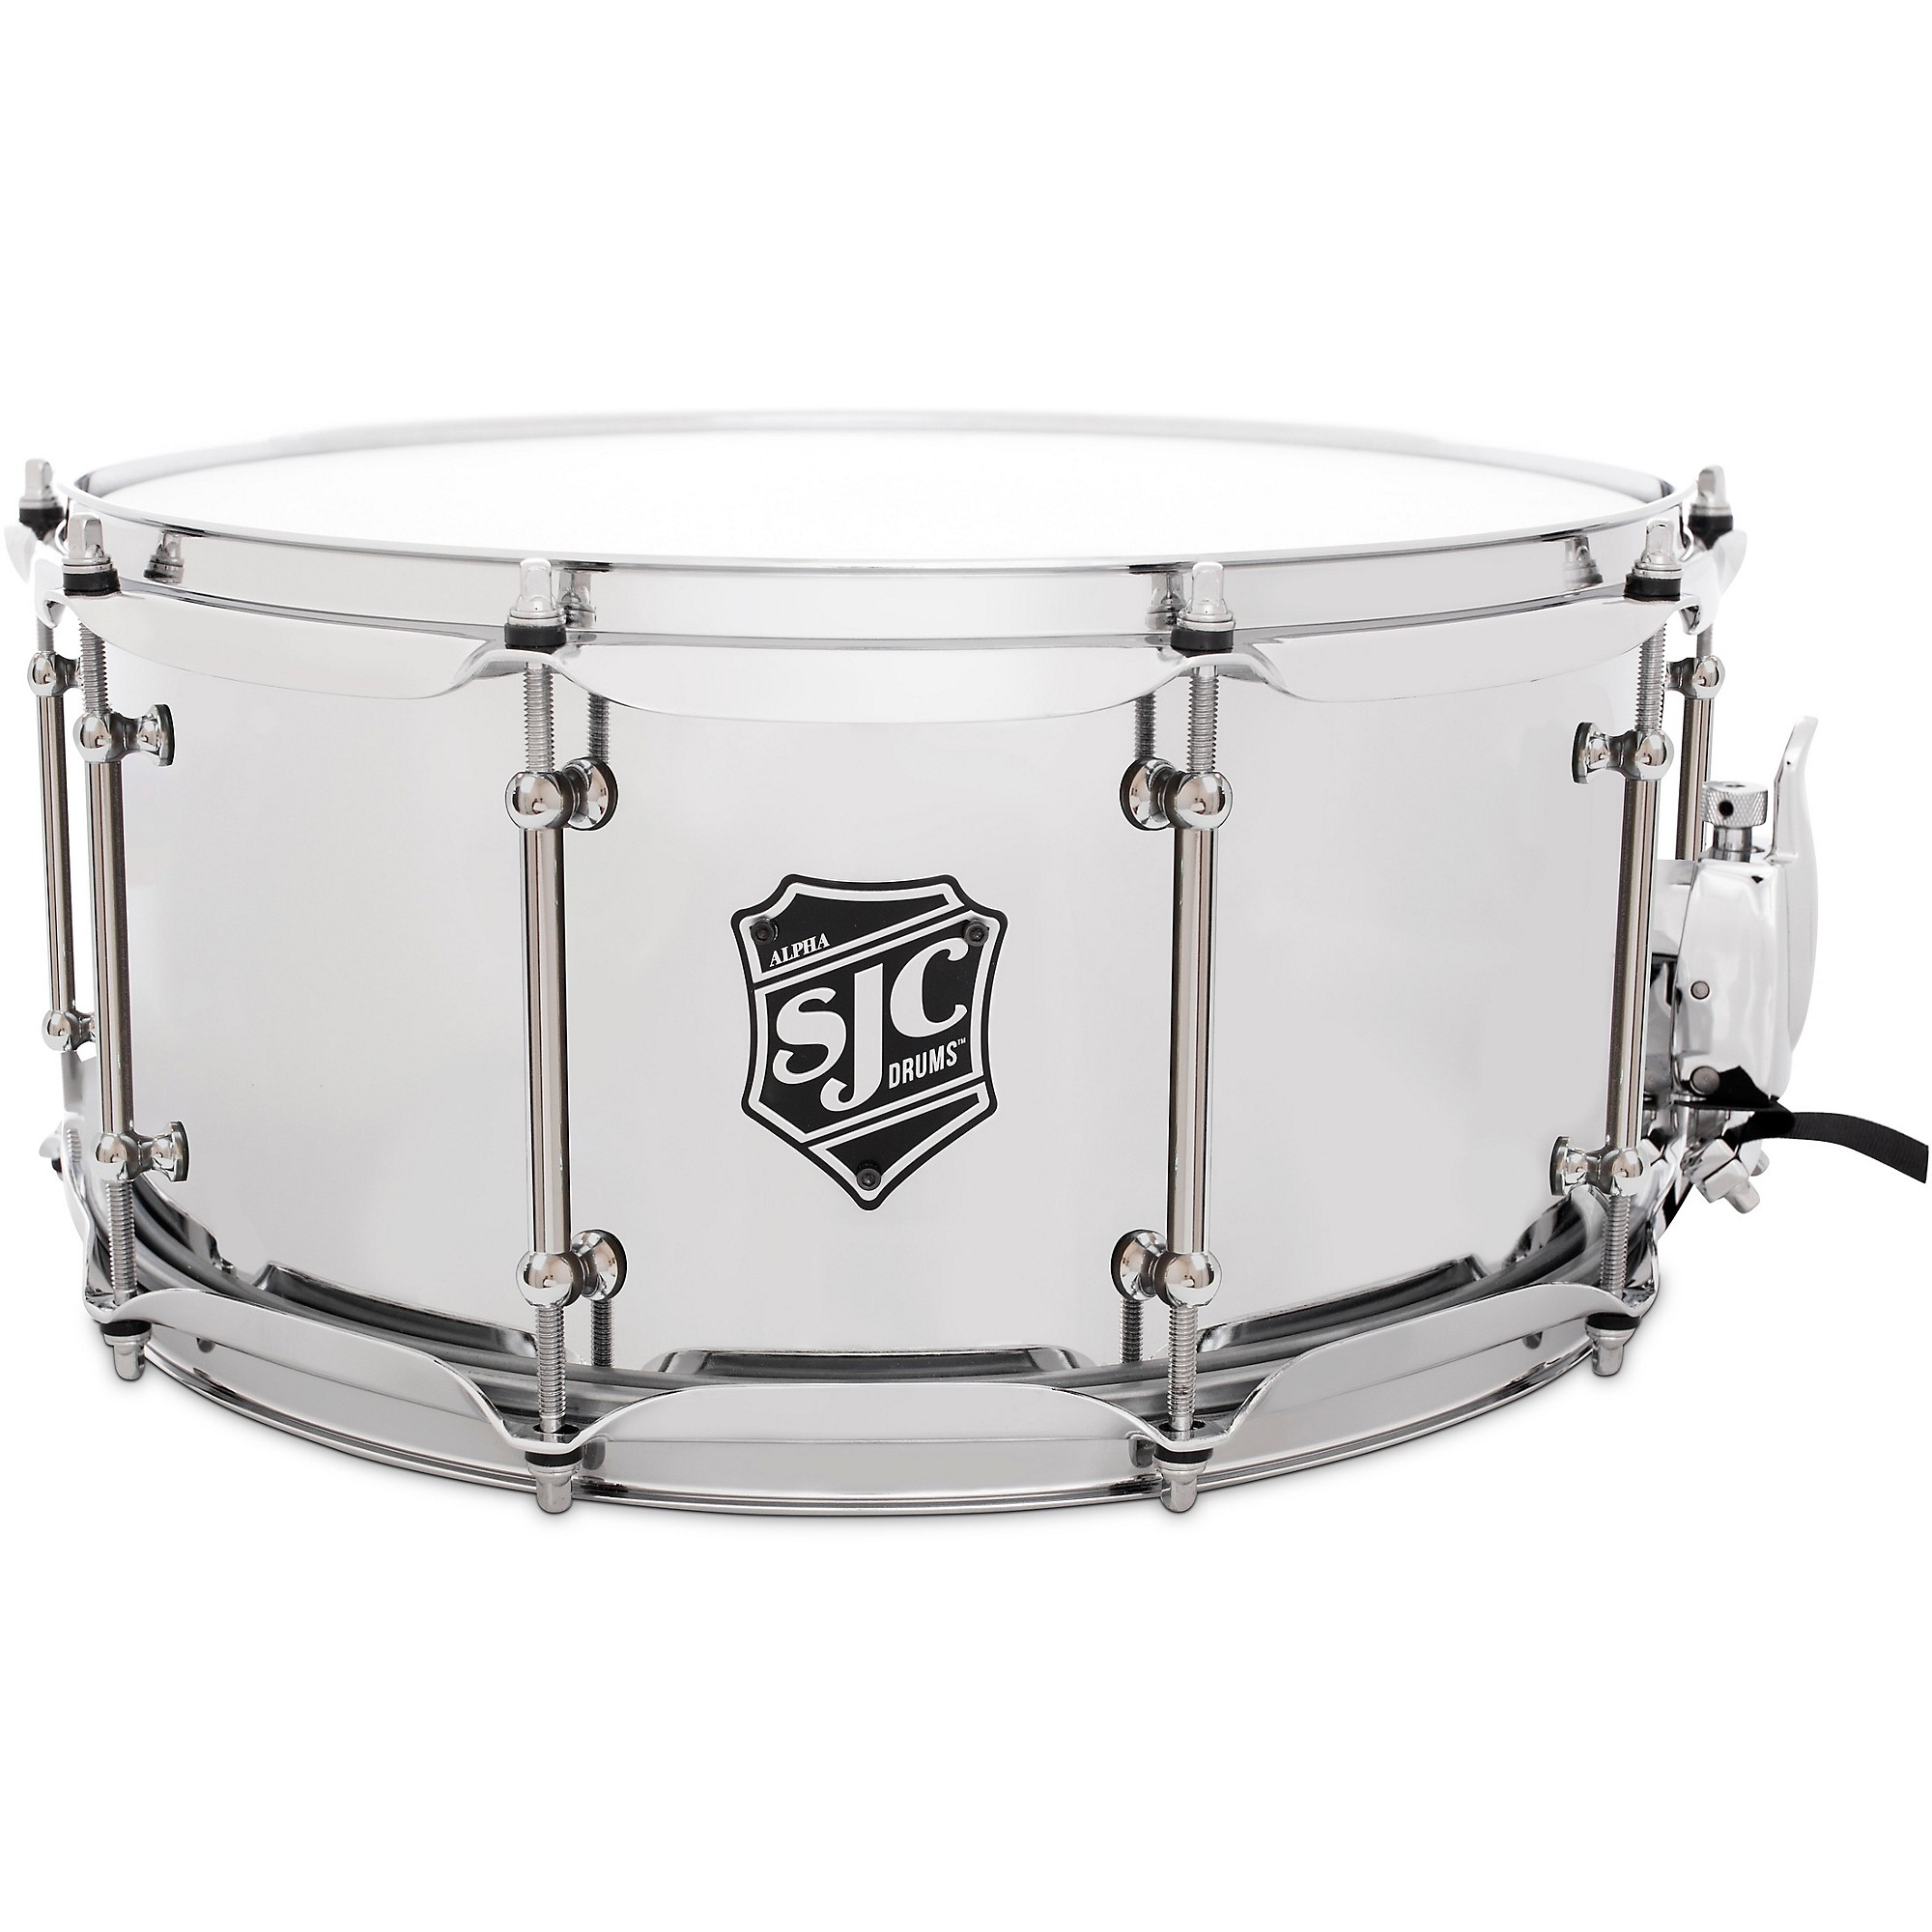 SJC Drums Alpha Steel Snare 14 x 6.5 in. | Guitar Center